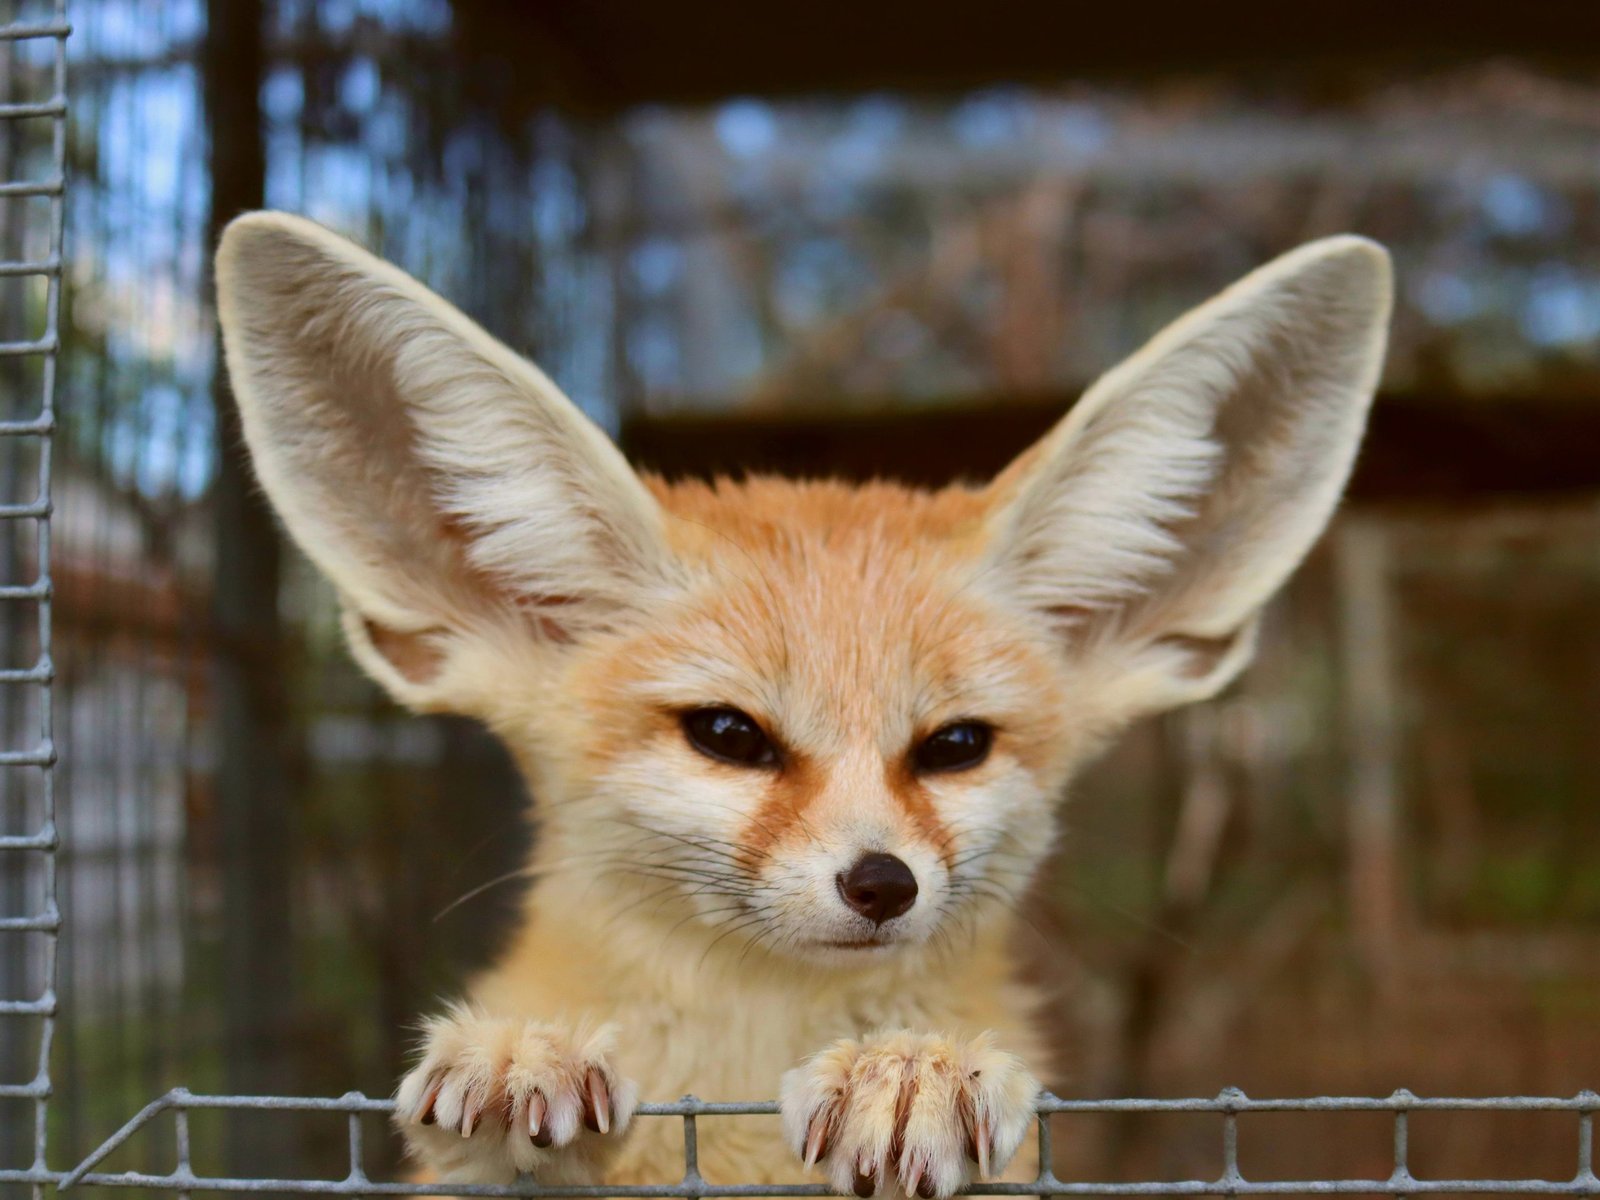 Should You Keep Fennec Fox (Desert Fox) As a Pet?